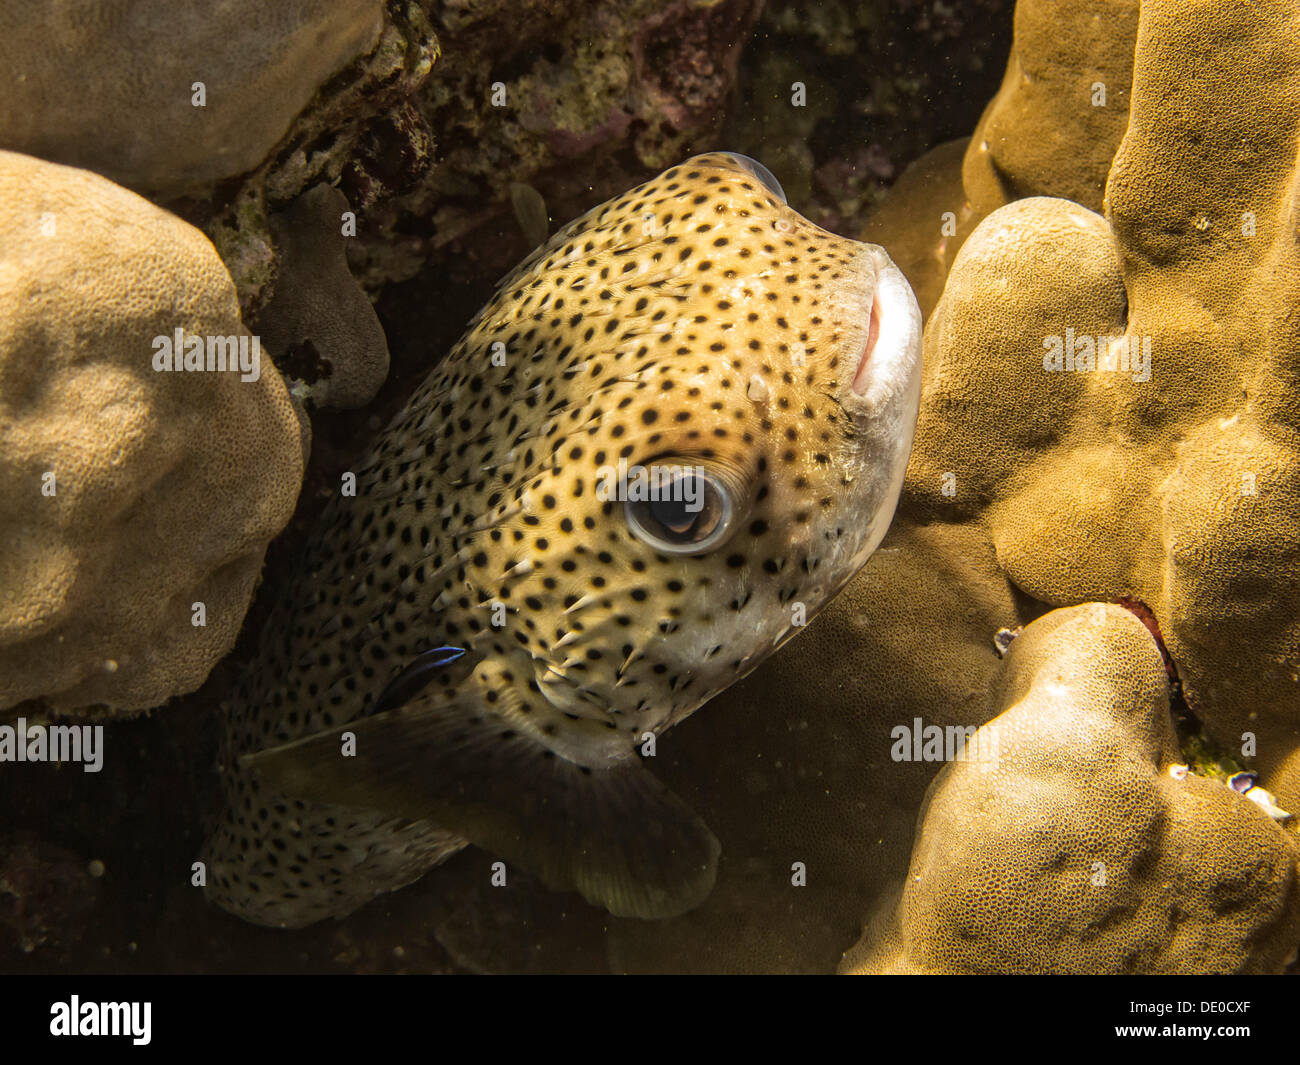 Spot-fin Porcupinefish (Diodon hystrix), Mangrove Bay, Red Sea, Egypt, Africa Stock Photo